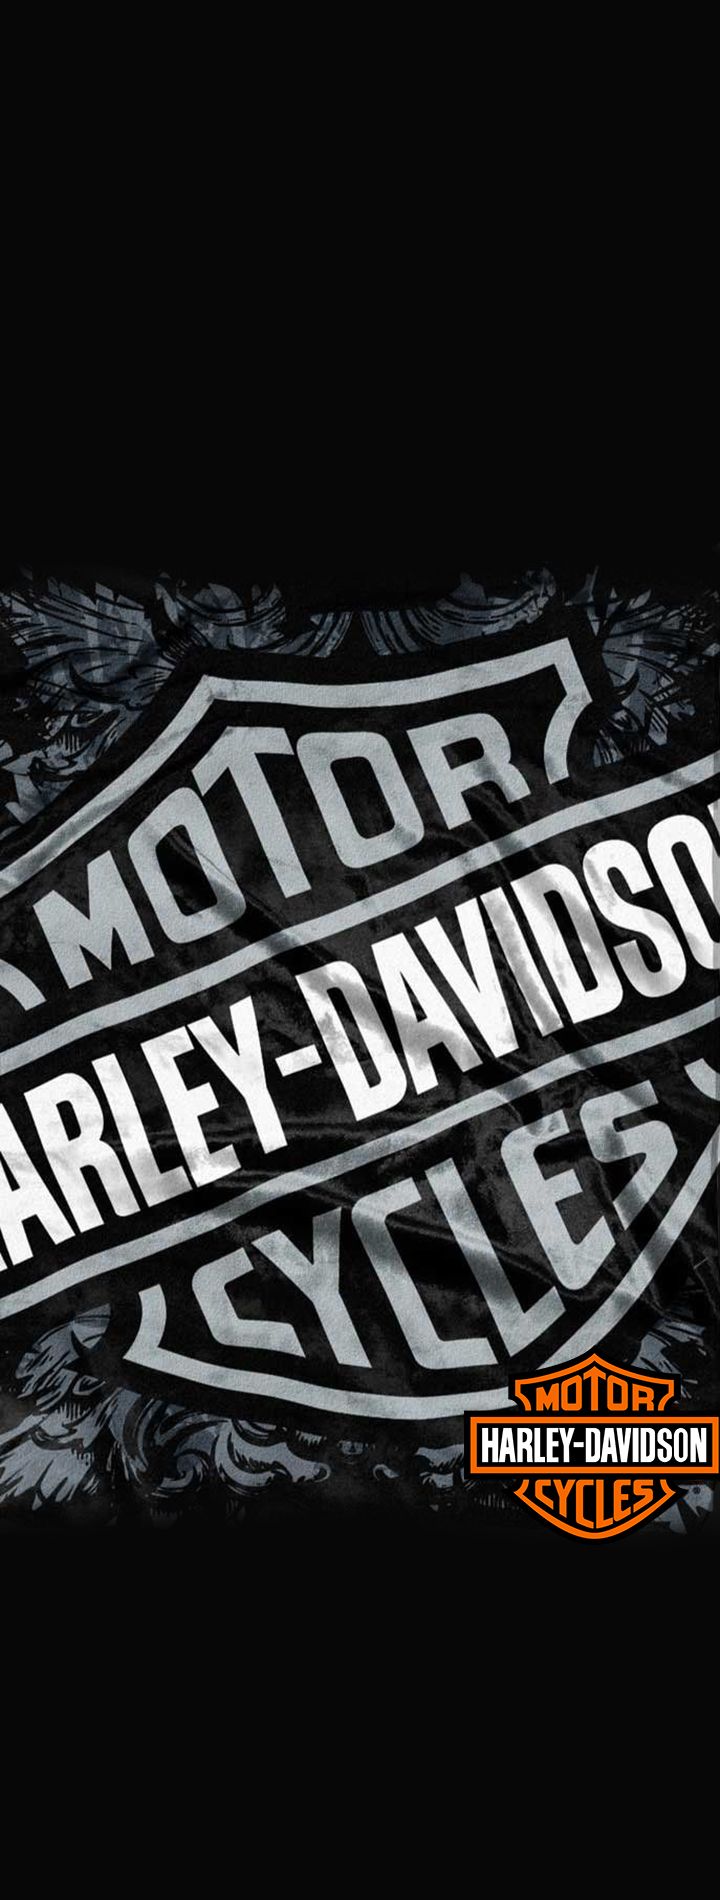 Harley Phone Wallpaper. Harley davidson wallpaper, Harley davidson posters, Harley davidson stickers